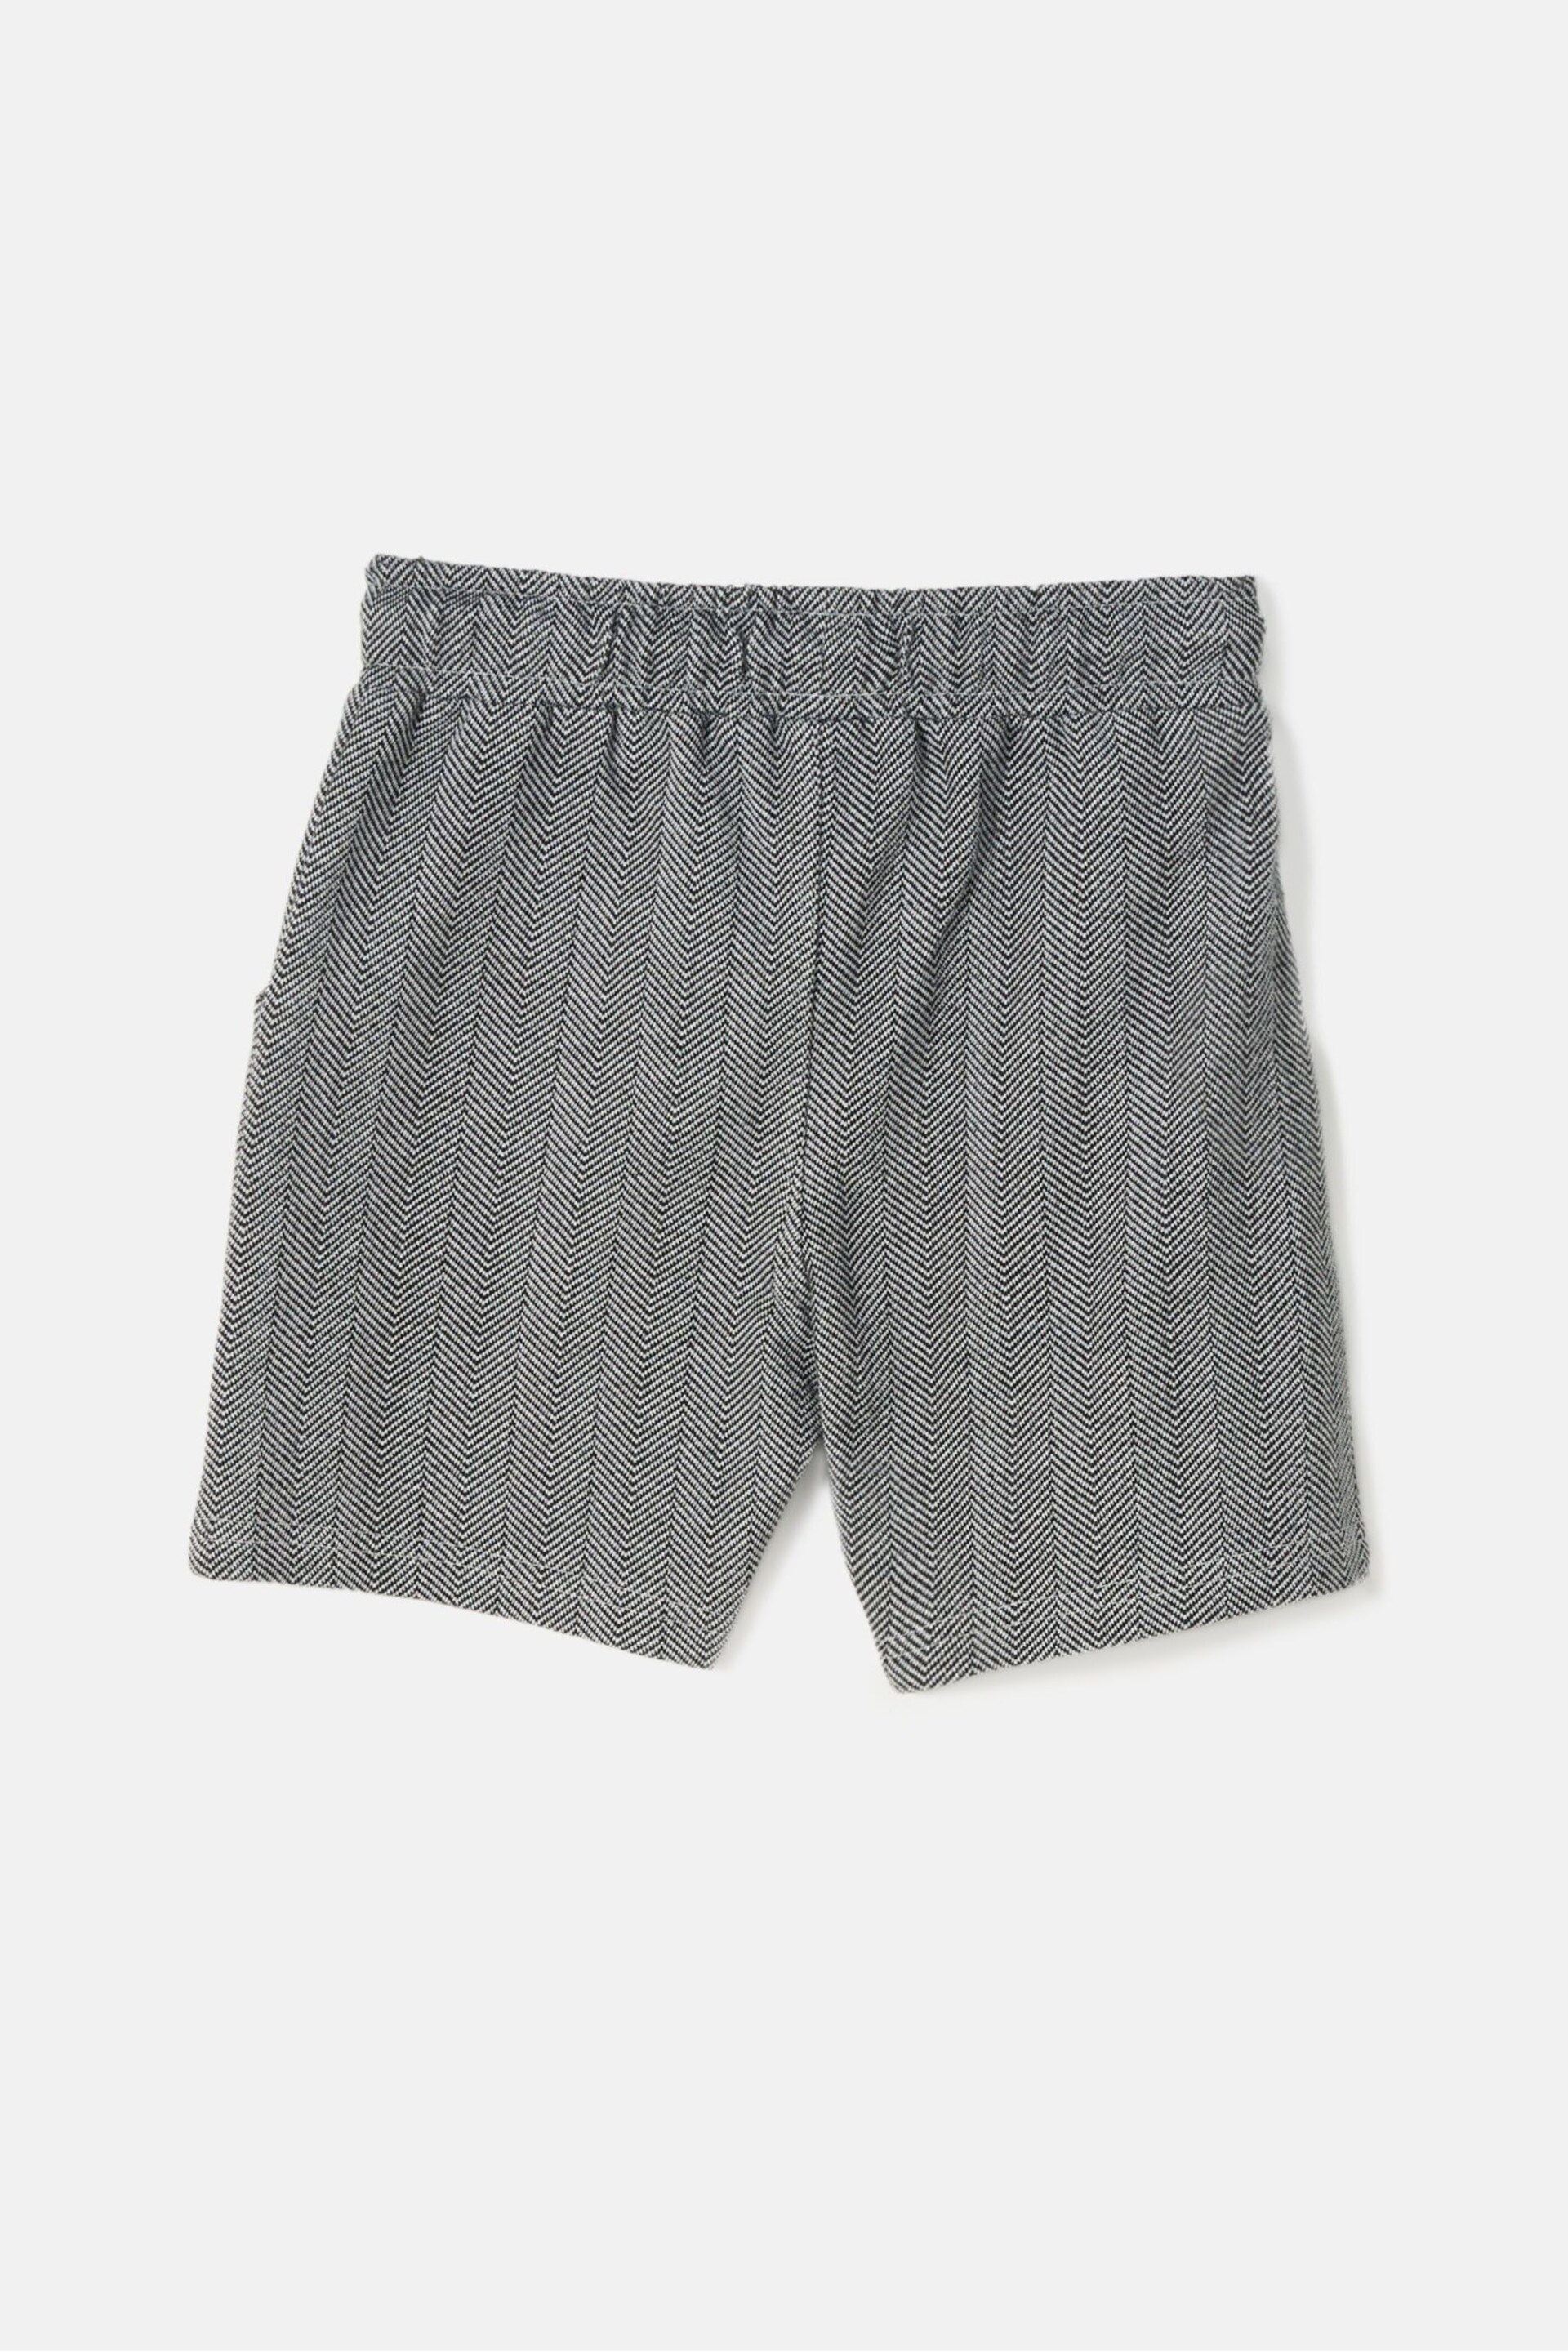 Angel & Rocket Grey Justin Herringbone Smart Shorts - Image 4 of 4